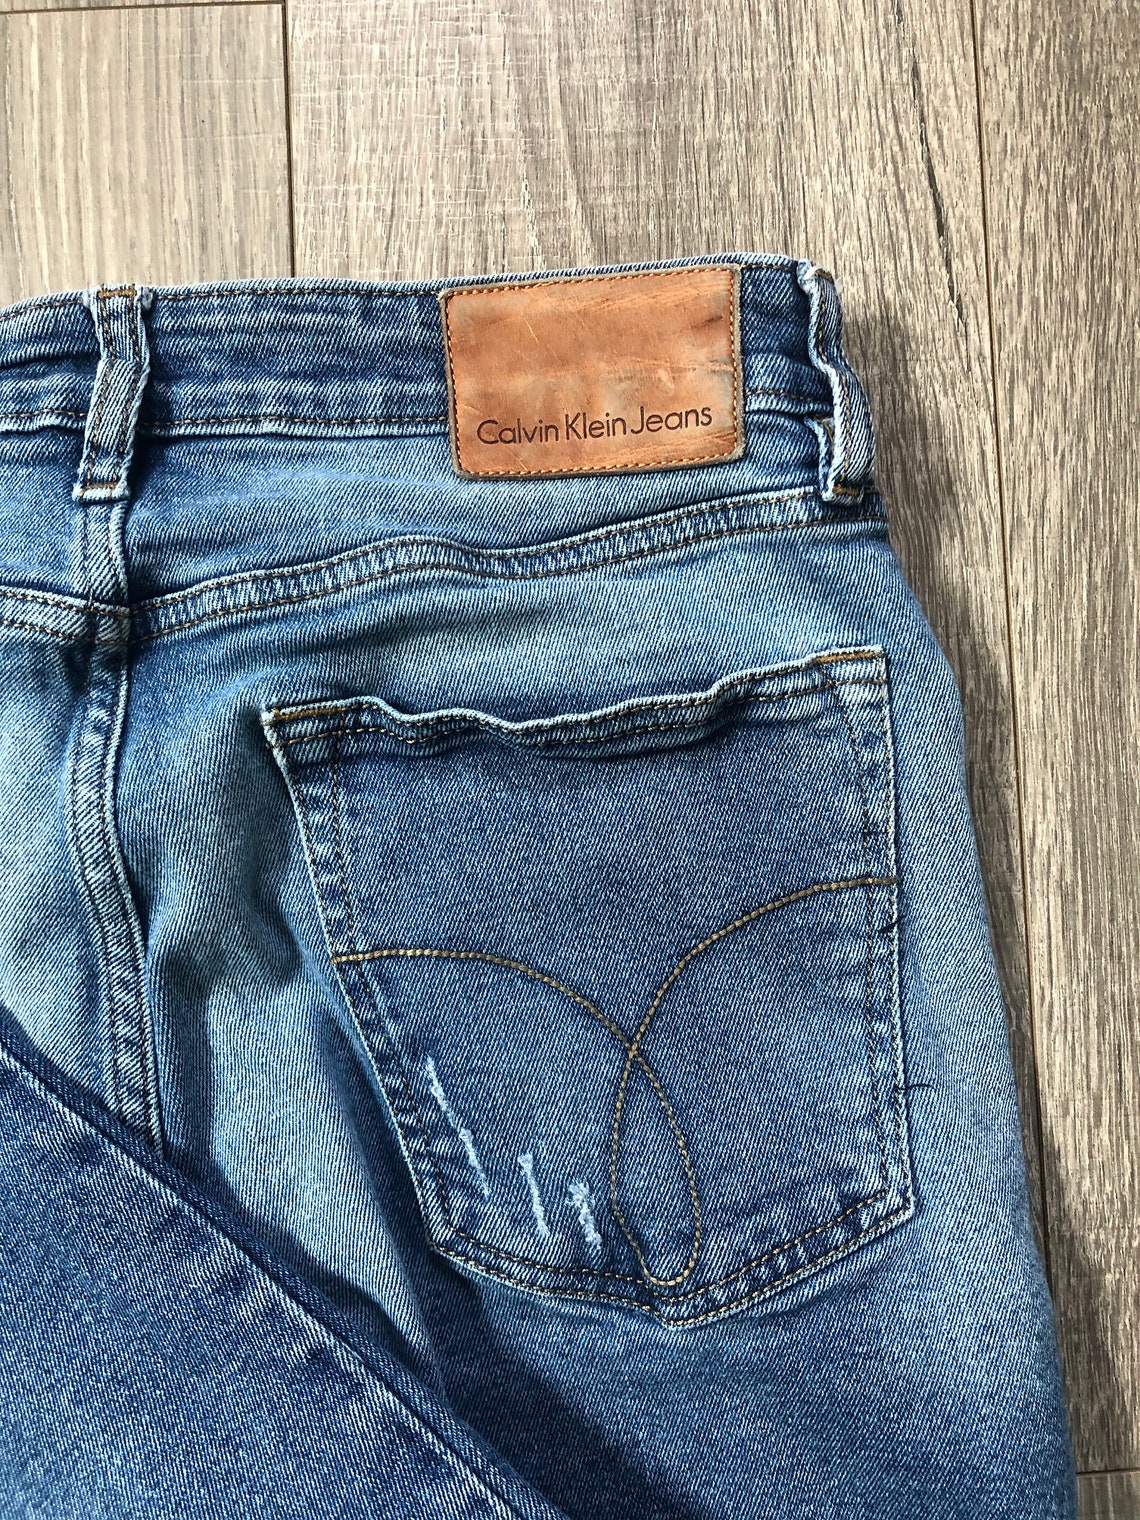 2000's Distressed Calvin Klein Jeans Vintage Calvin Klein | Etsy